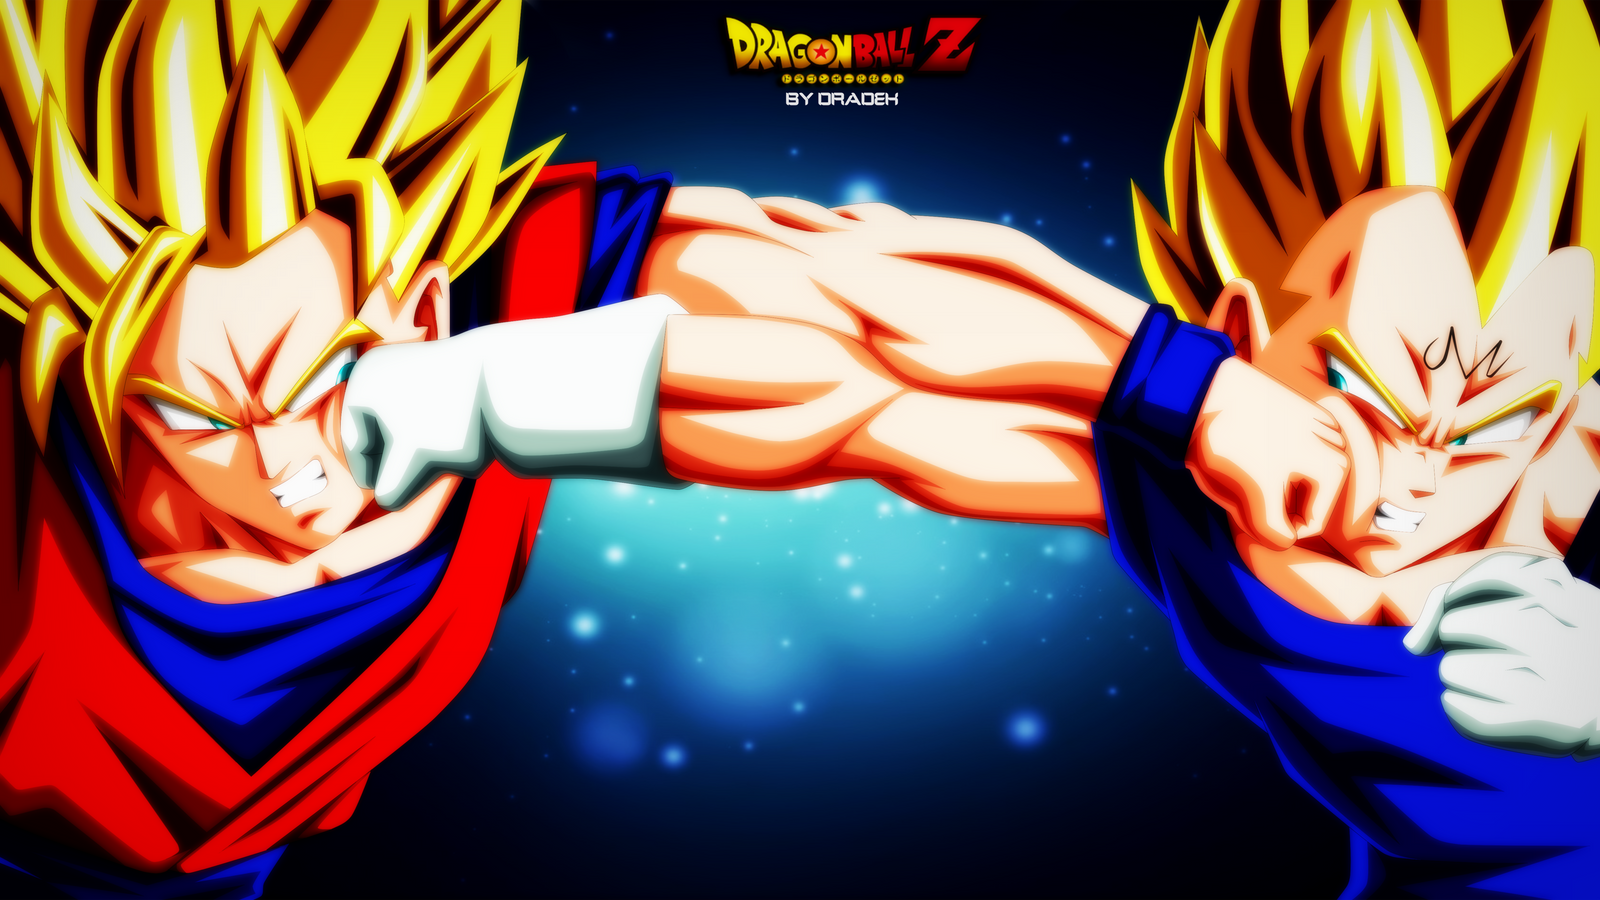 Majin Vegeta Vs Goku (DBZ) By DraDek by DraDek on DeviantArt